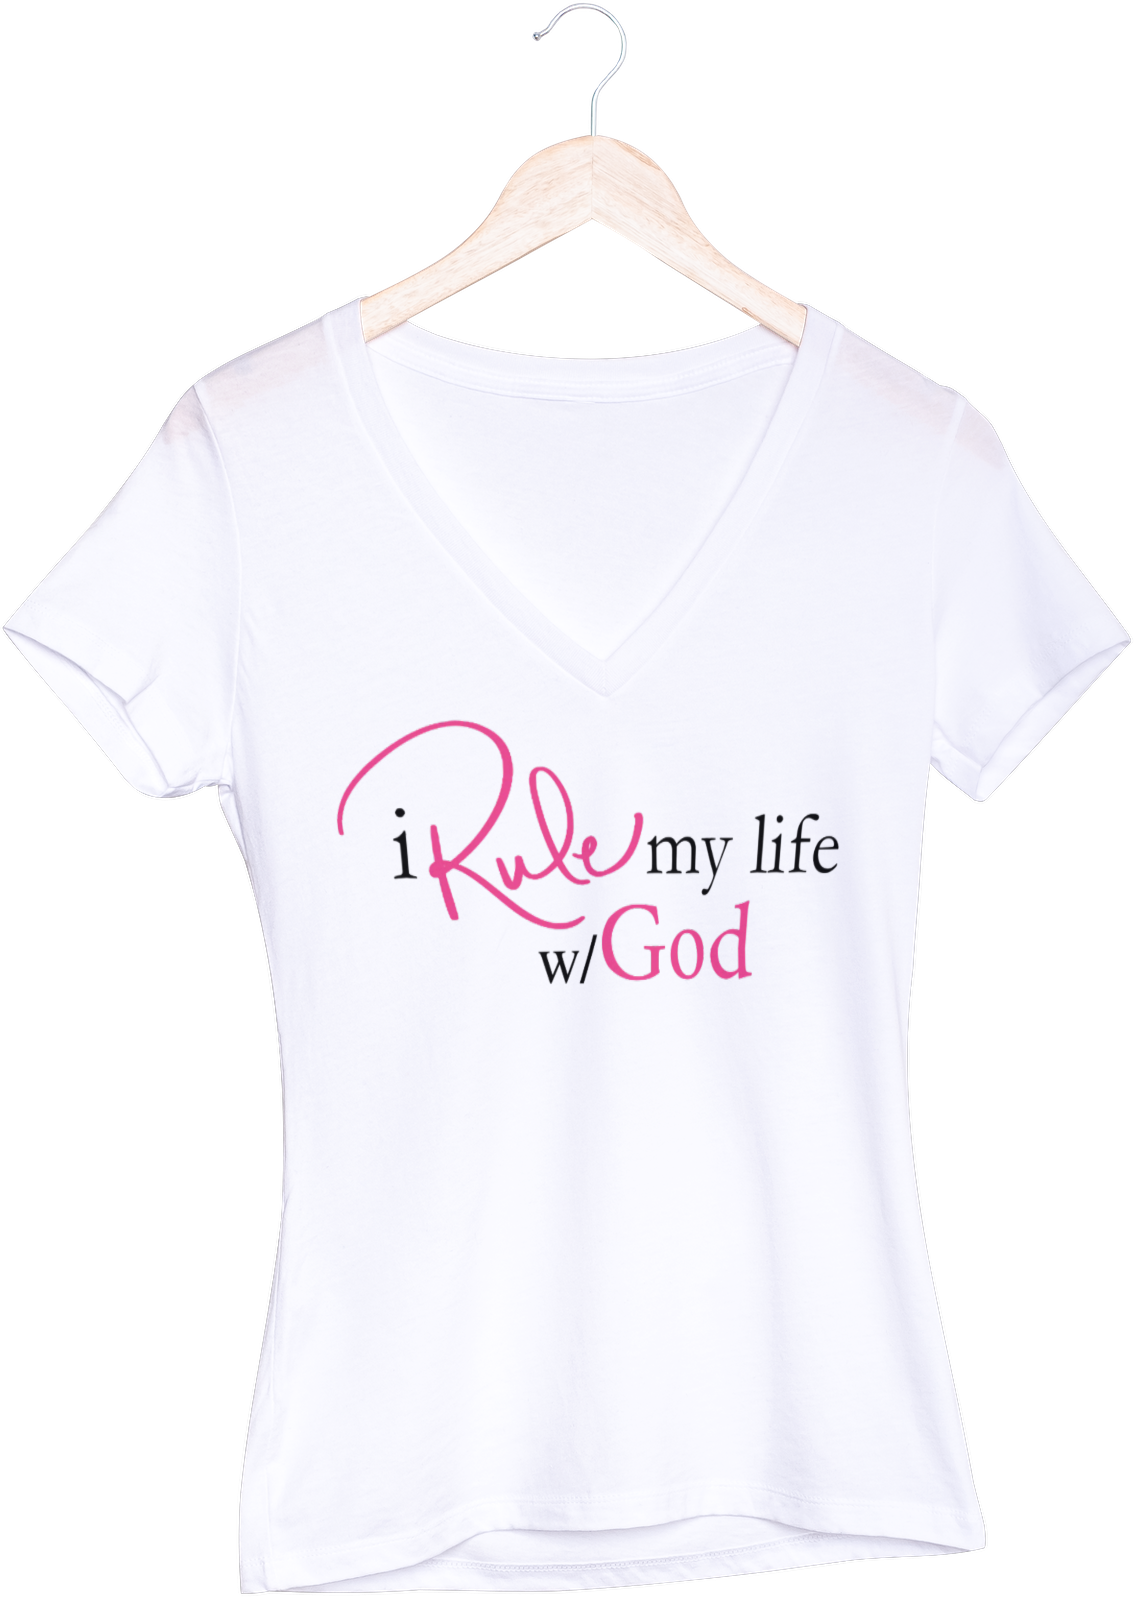 I Rule My Life w/God V-Neck T-shirt